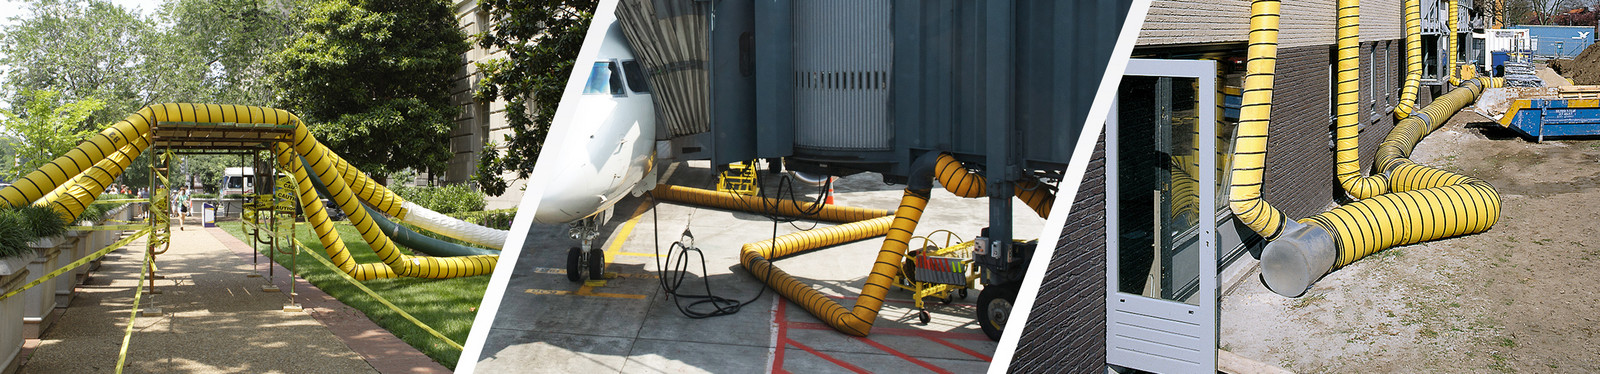 Air transport hoses